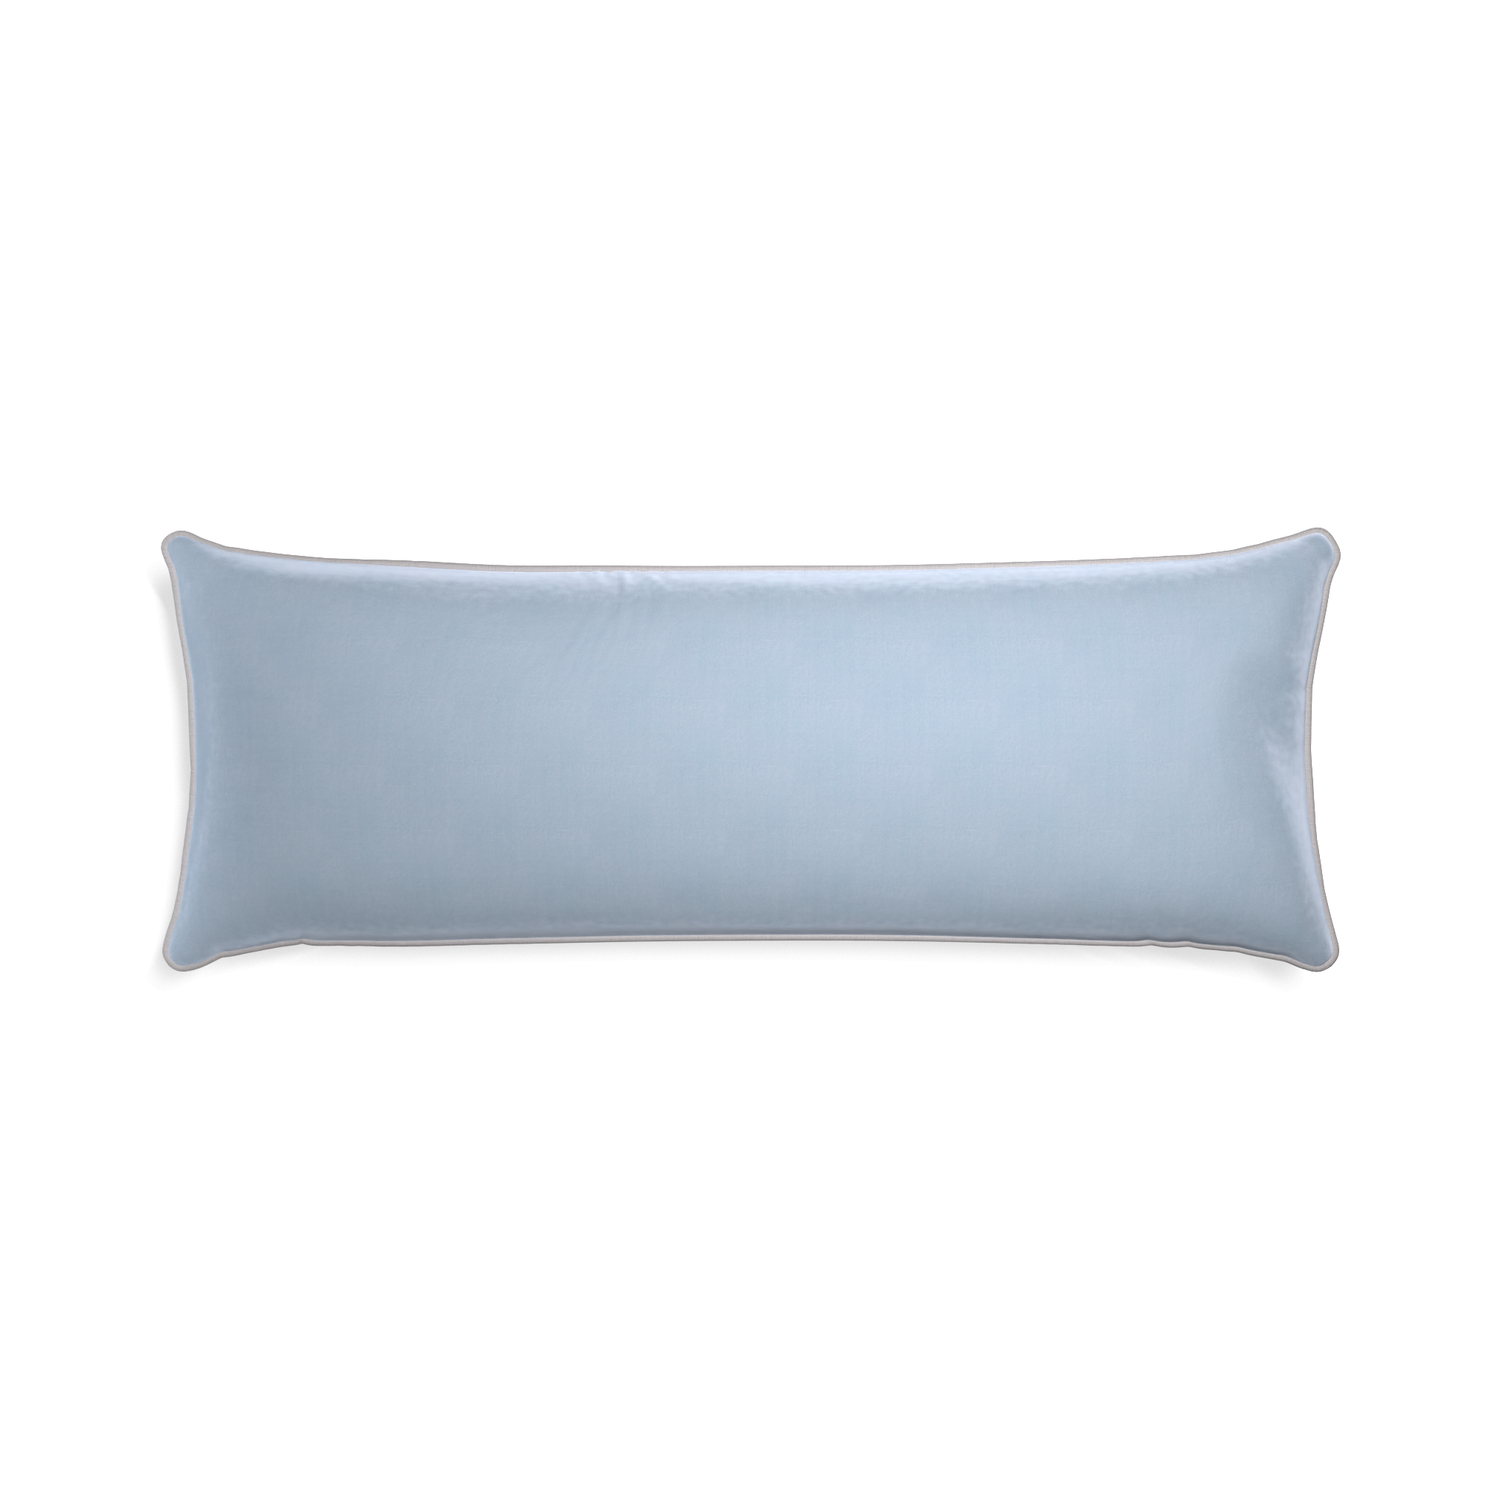 rectangle light blue velvet pillow with gray piping 